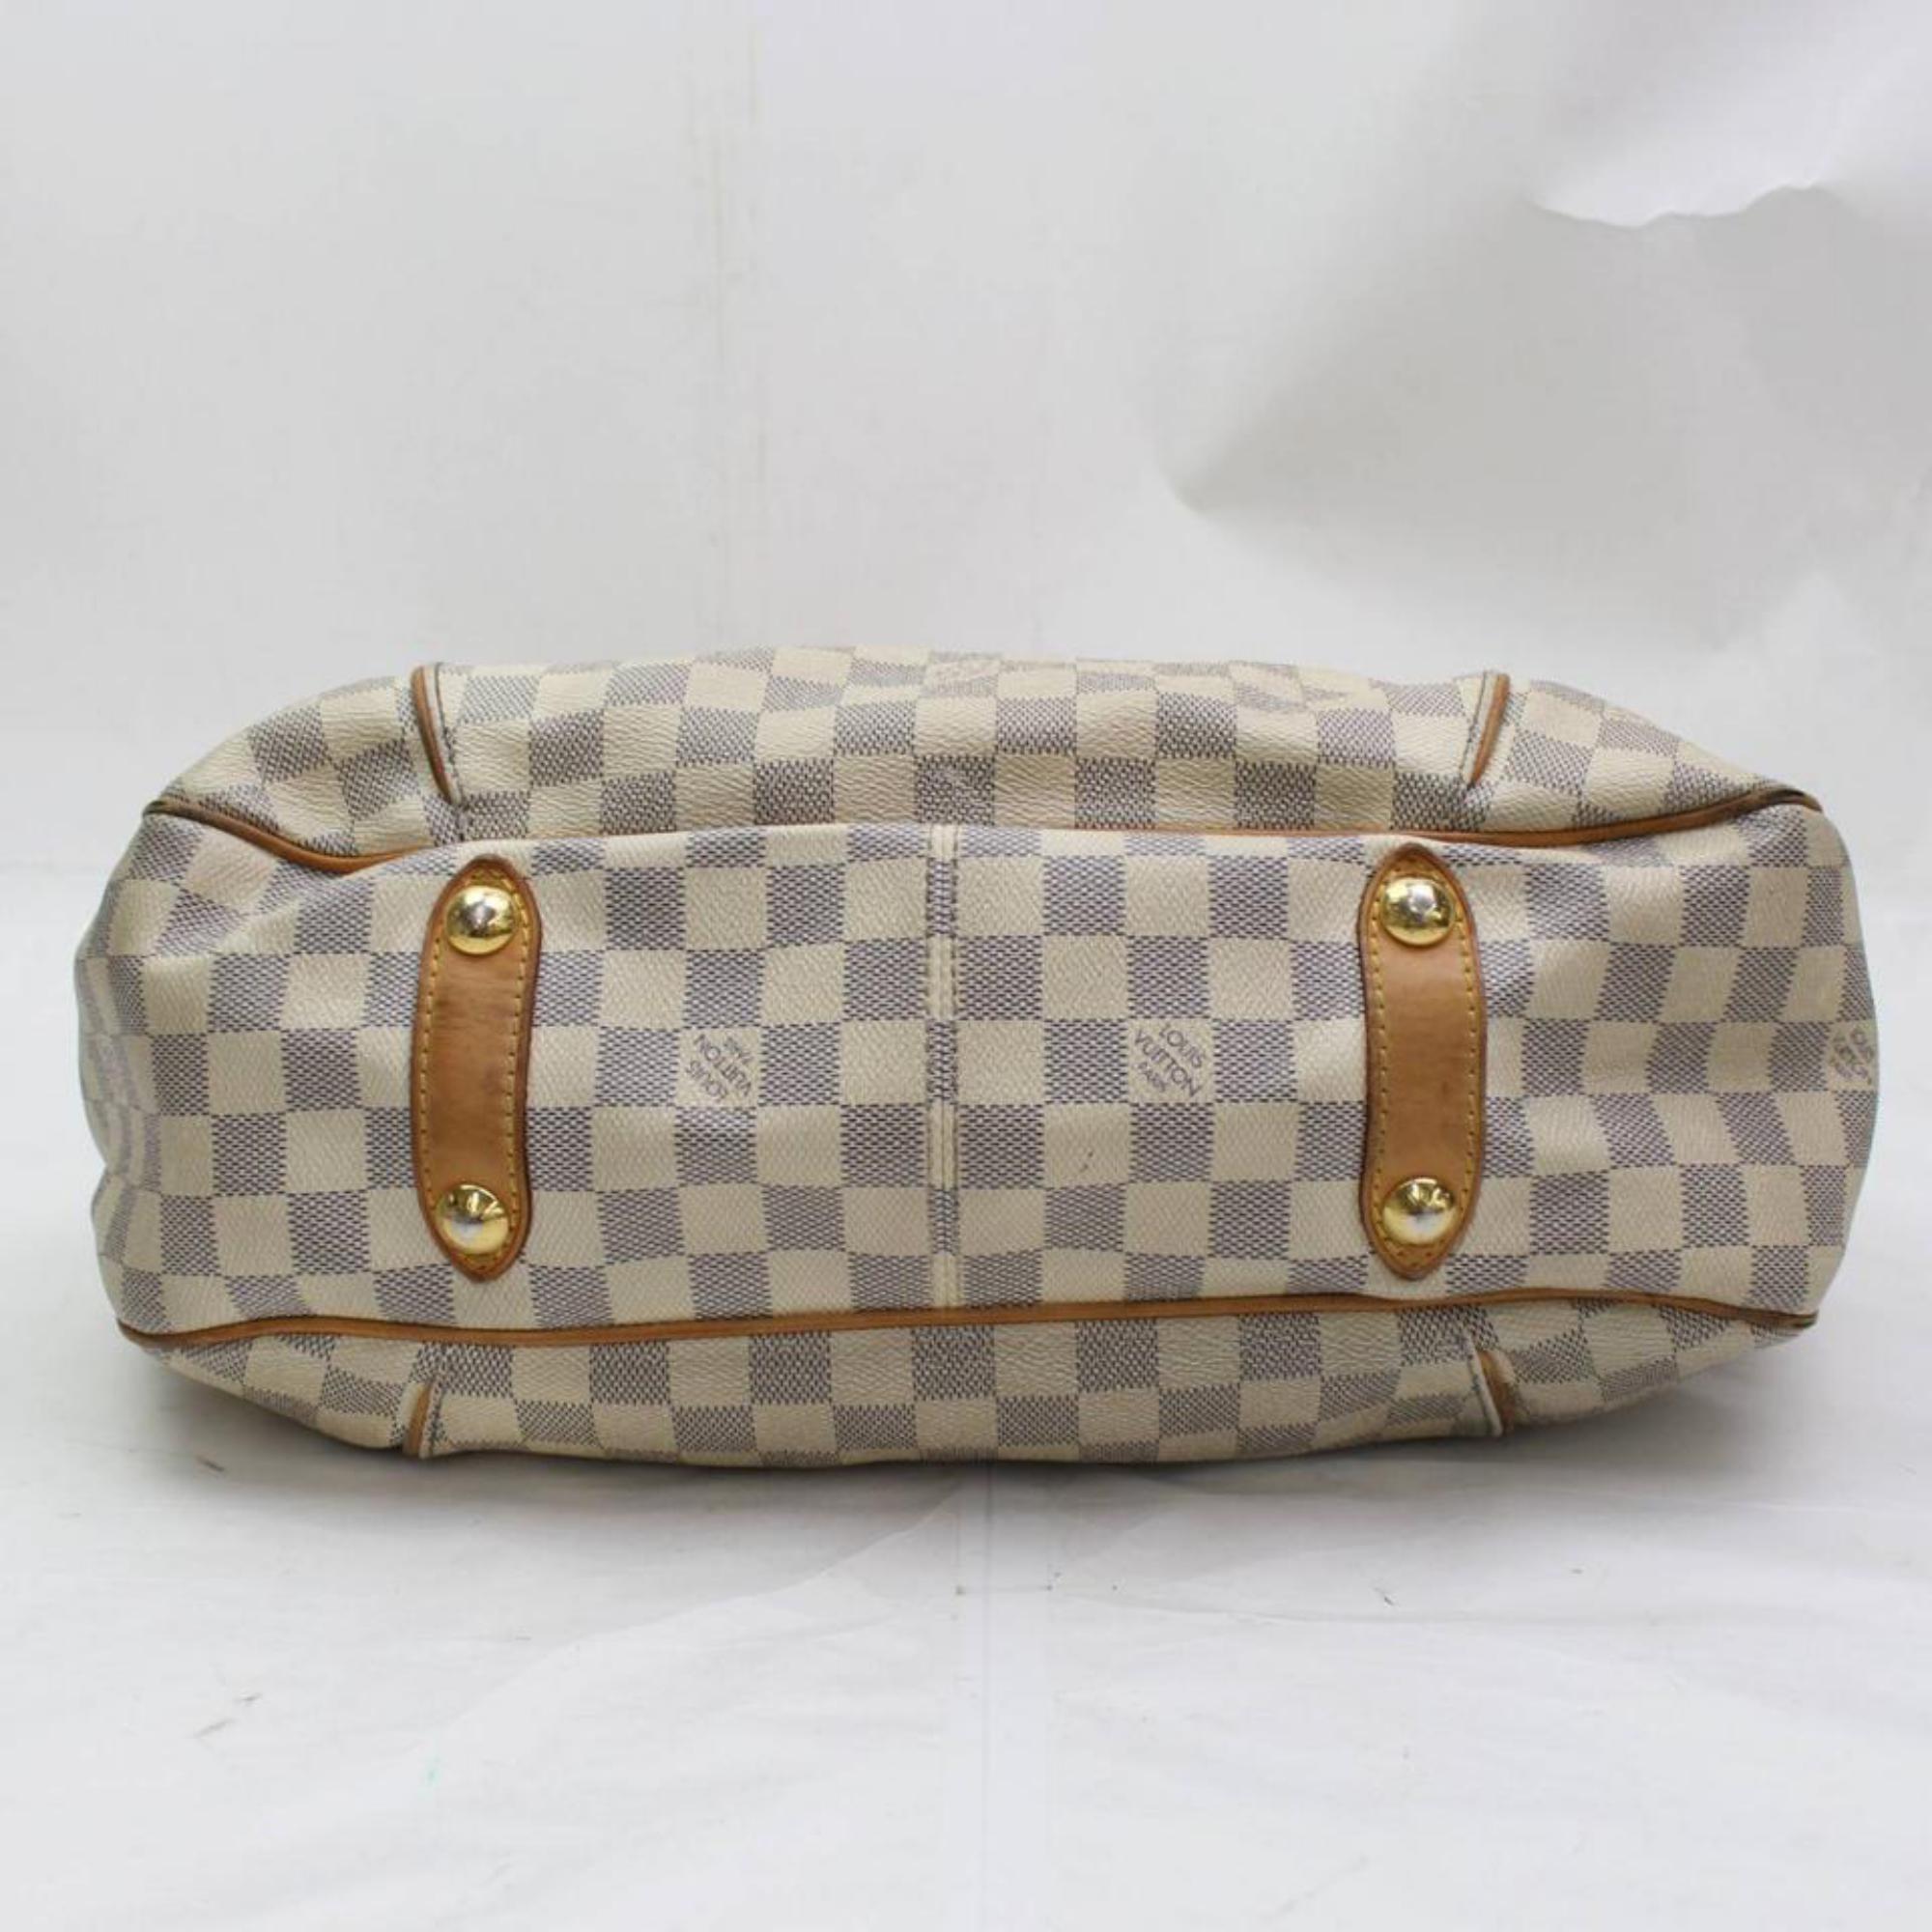 Louis Vuitton Galliera Damier Azur Pm Hobo 867767 White  Shoulder Bag For Sale 7